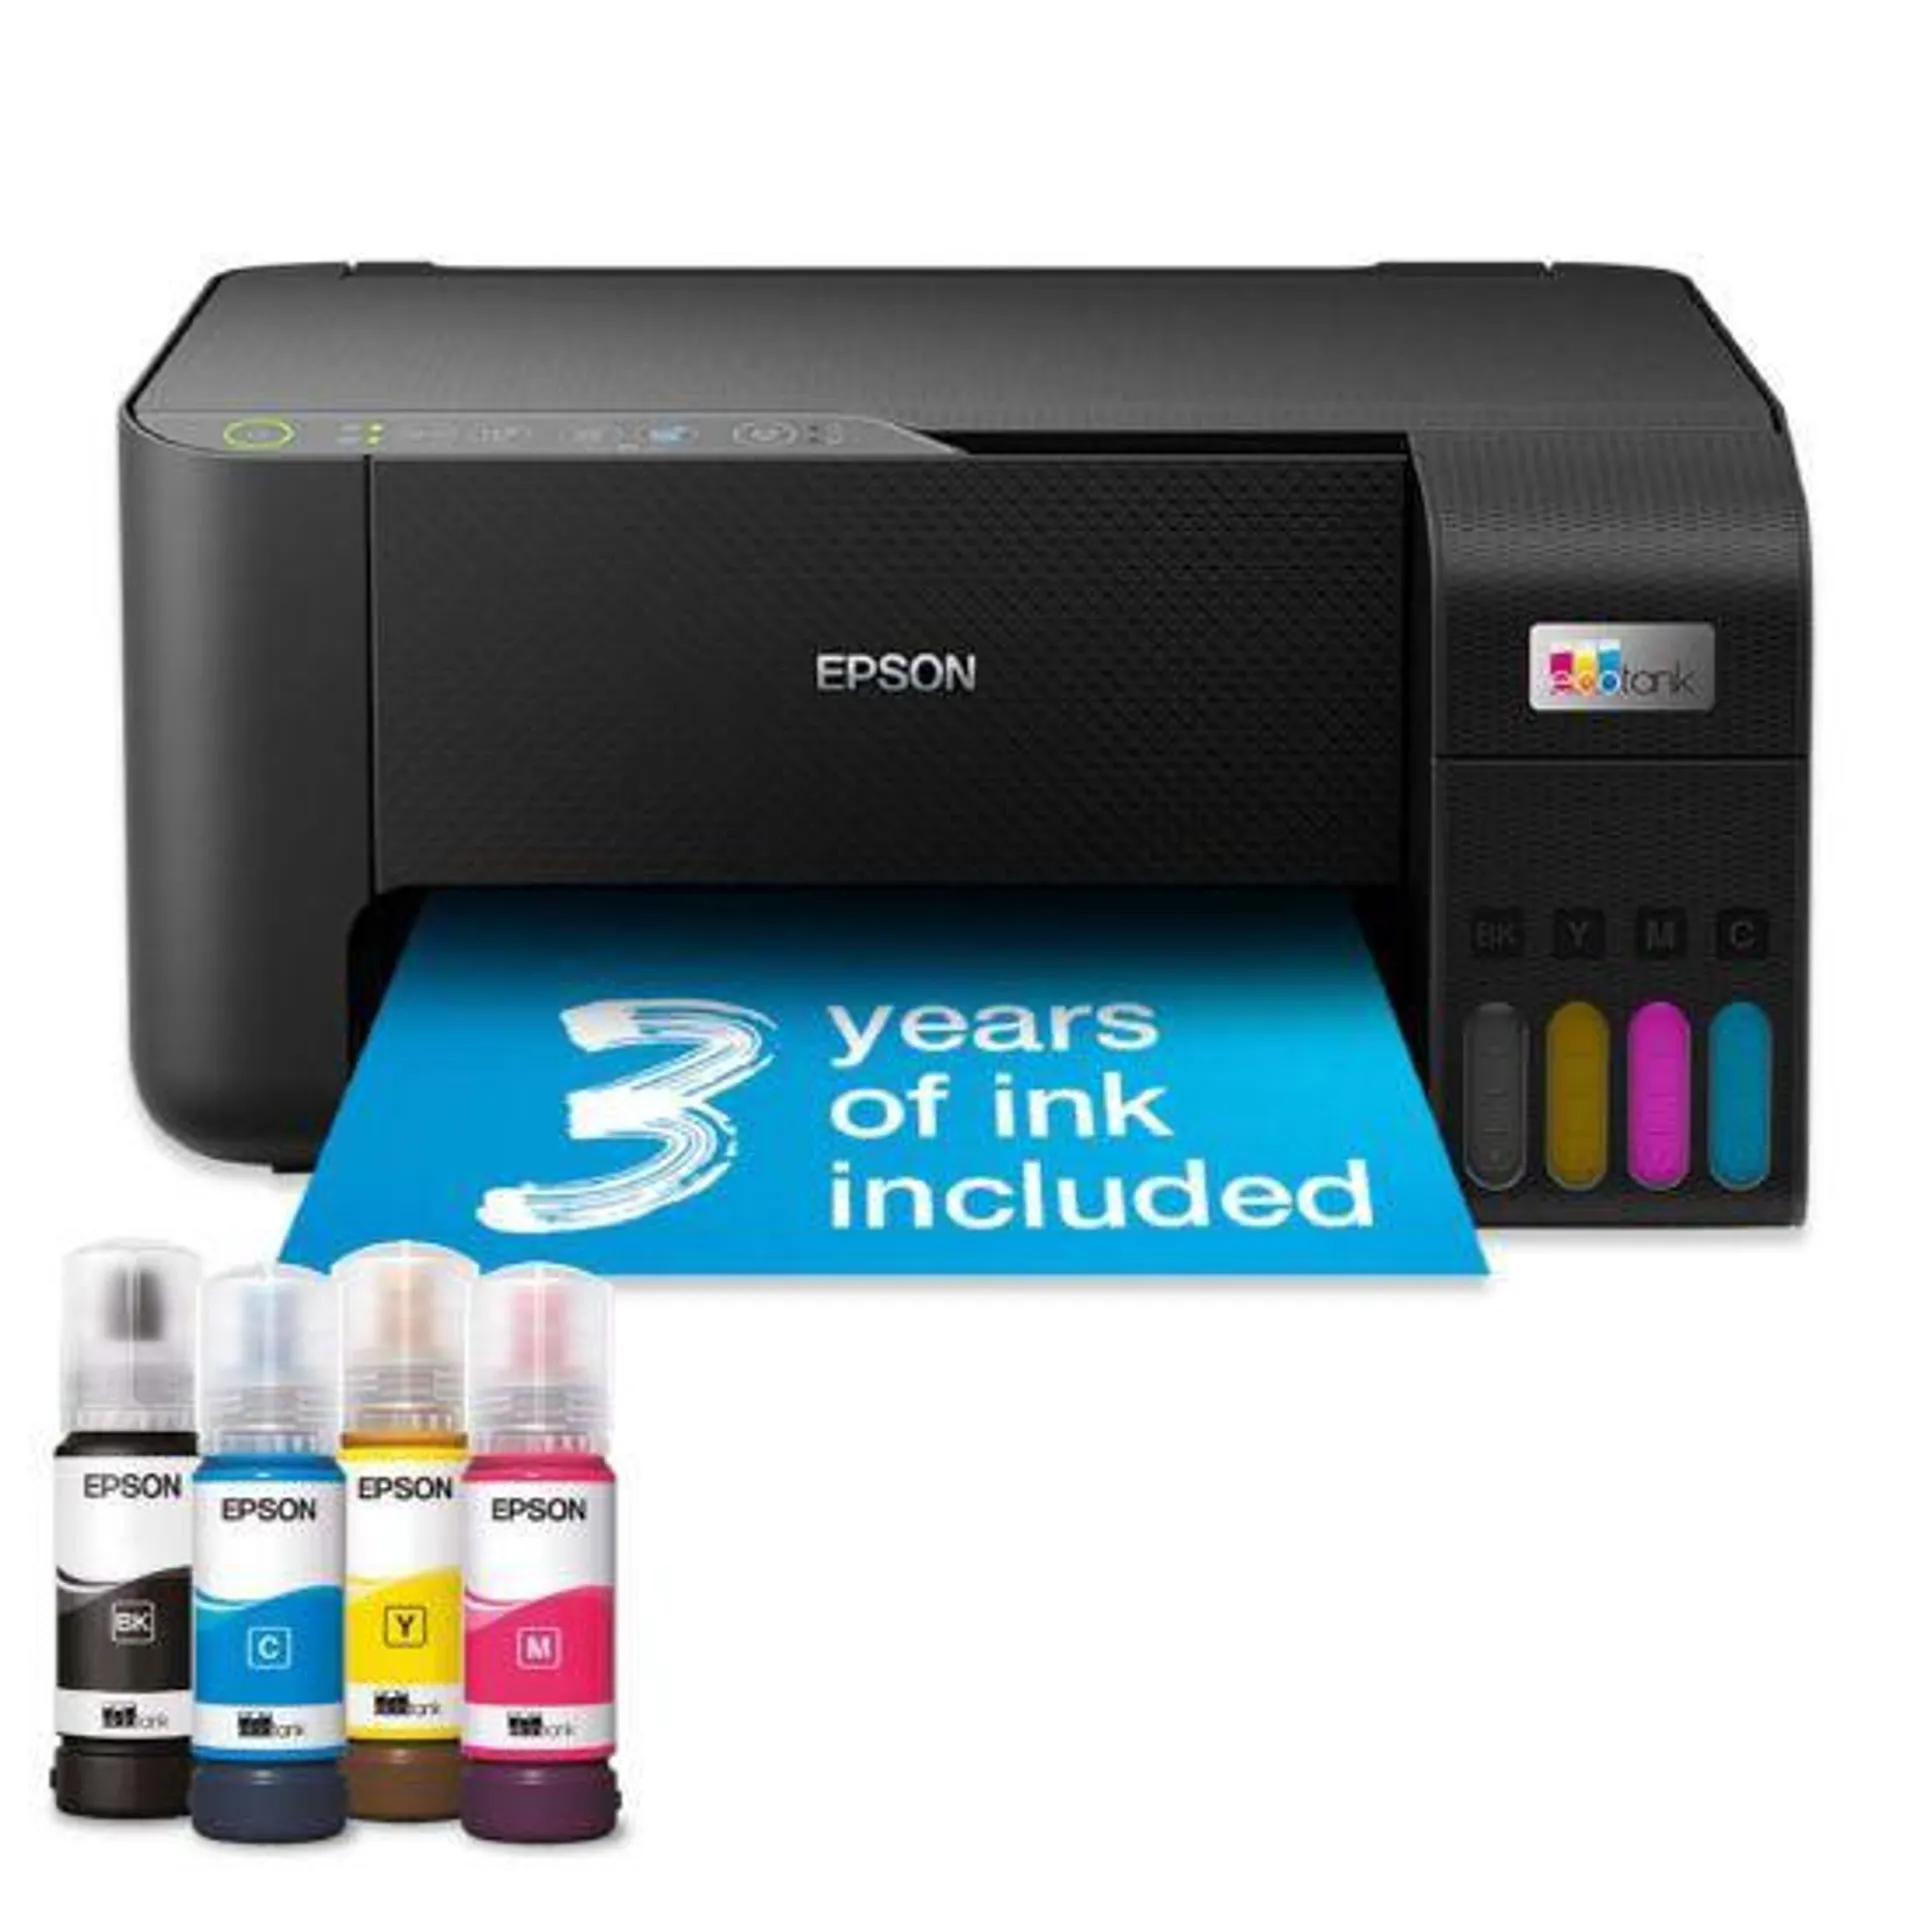 Epson EcoTank ET2860 Wireless Colour All in One Printer